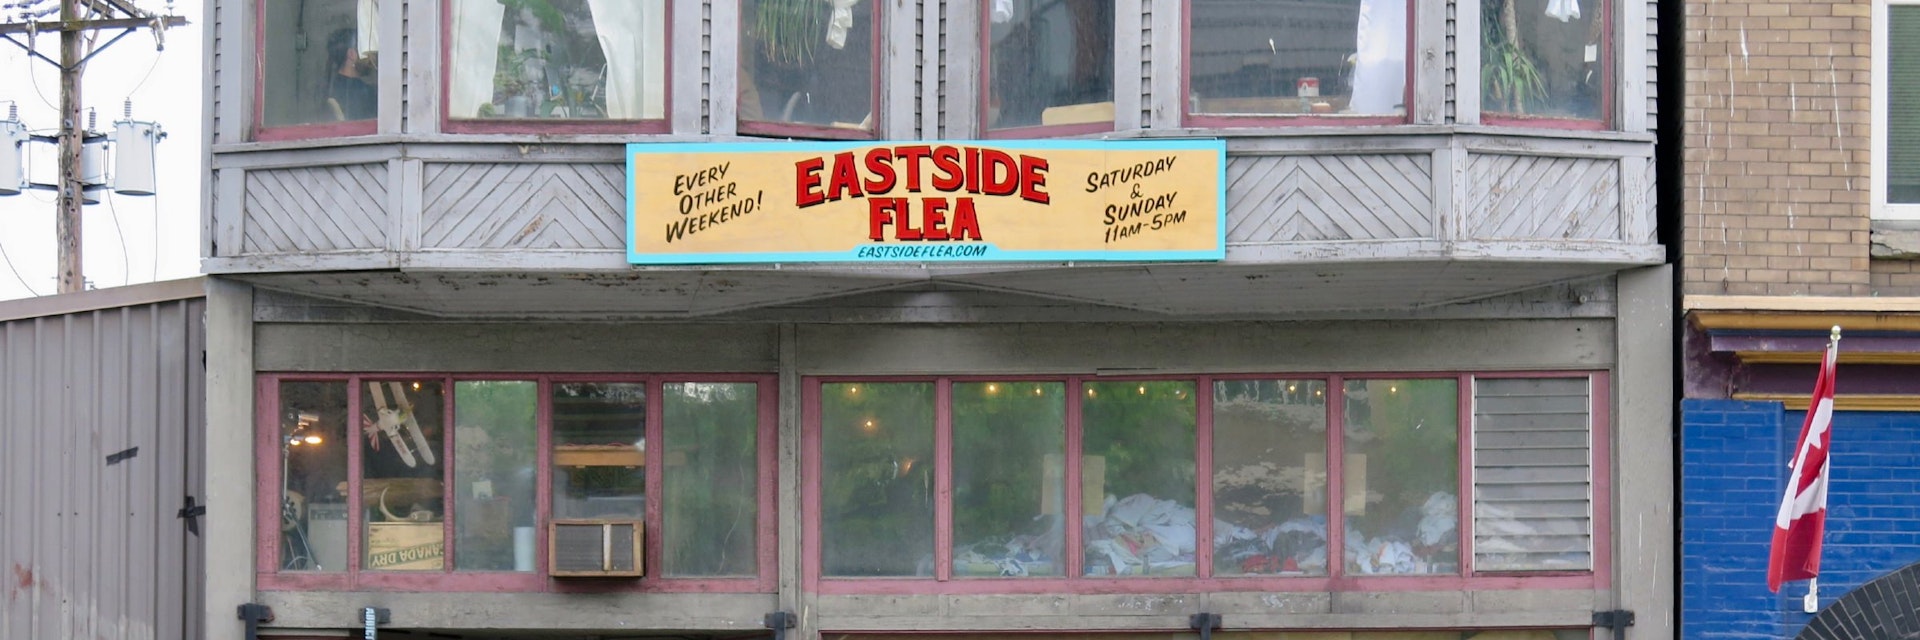 Exterior of the Eastside Flea market